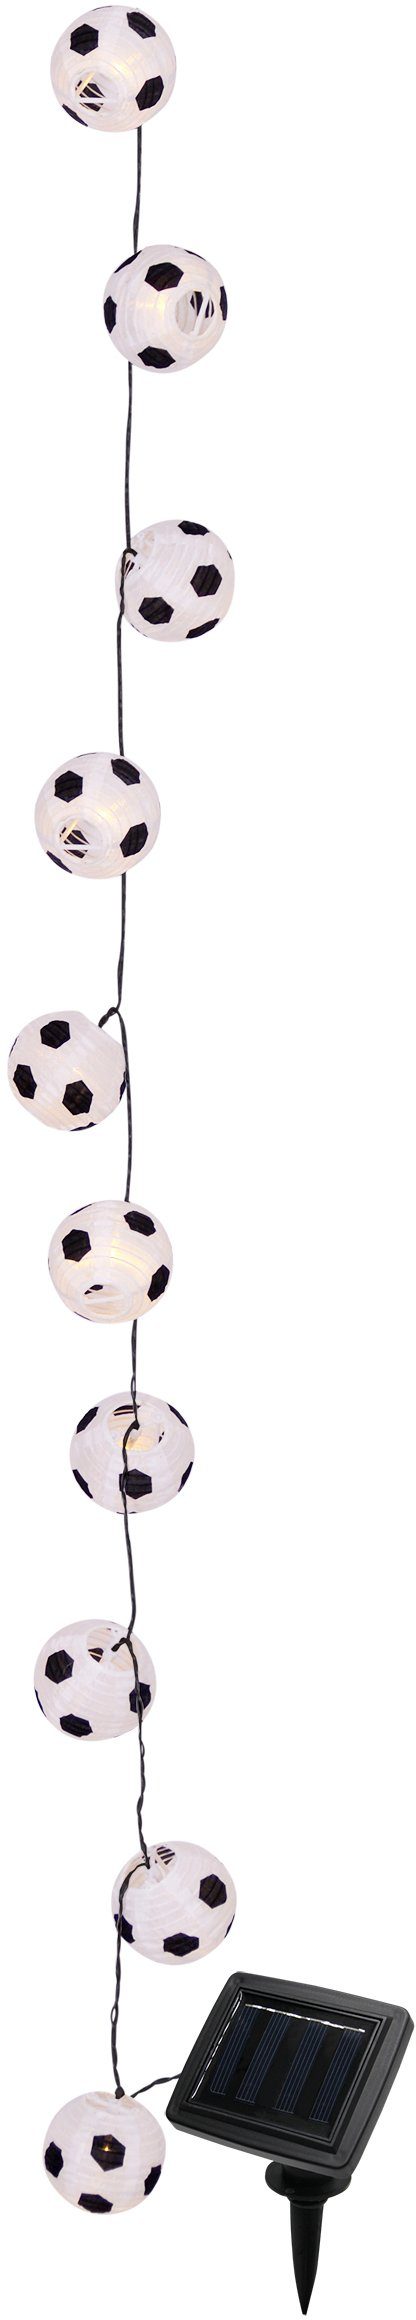 Material: Japanballon-20er-Solar-Lichterkette, Lichterkette Kunststoff, Farbe: Fußball, näve weiß/schwarz Polyester, Metall,